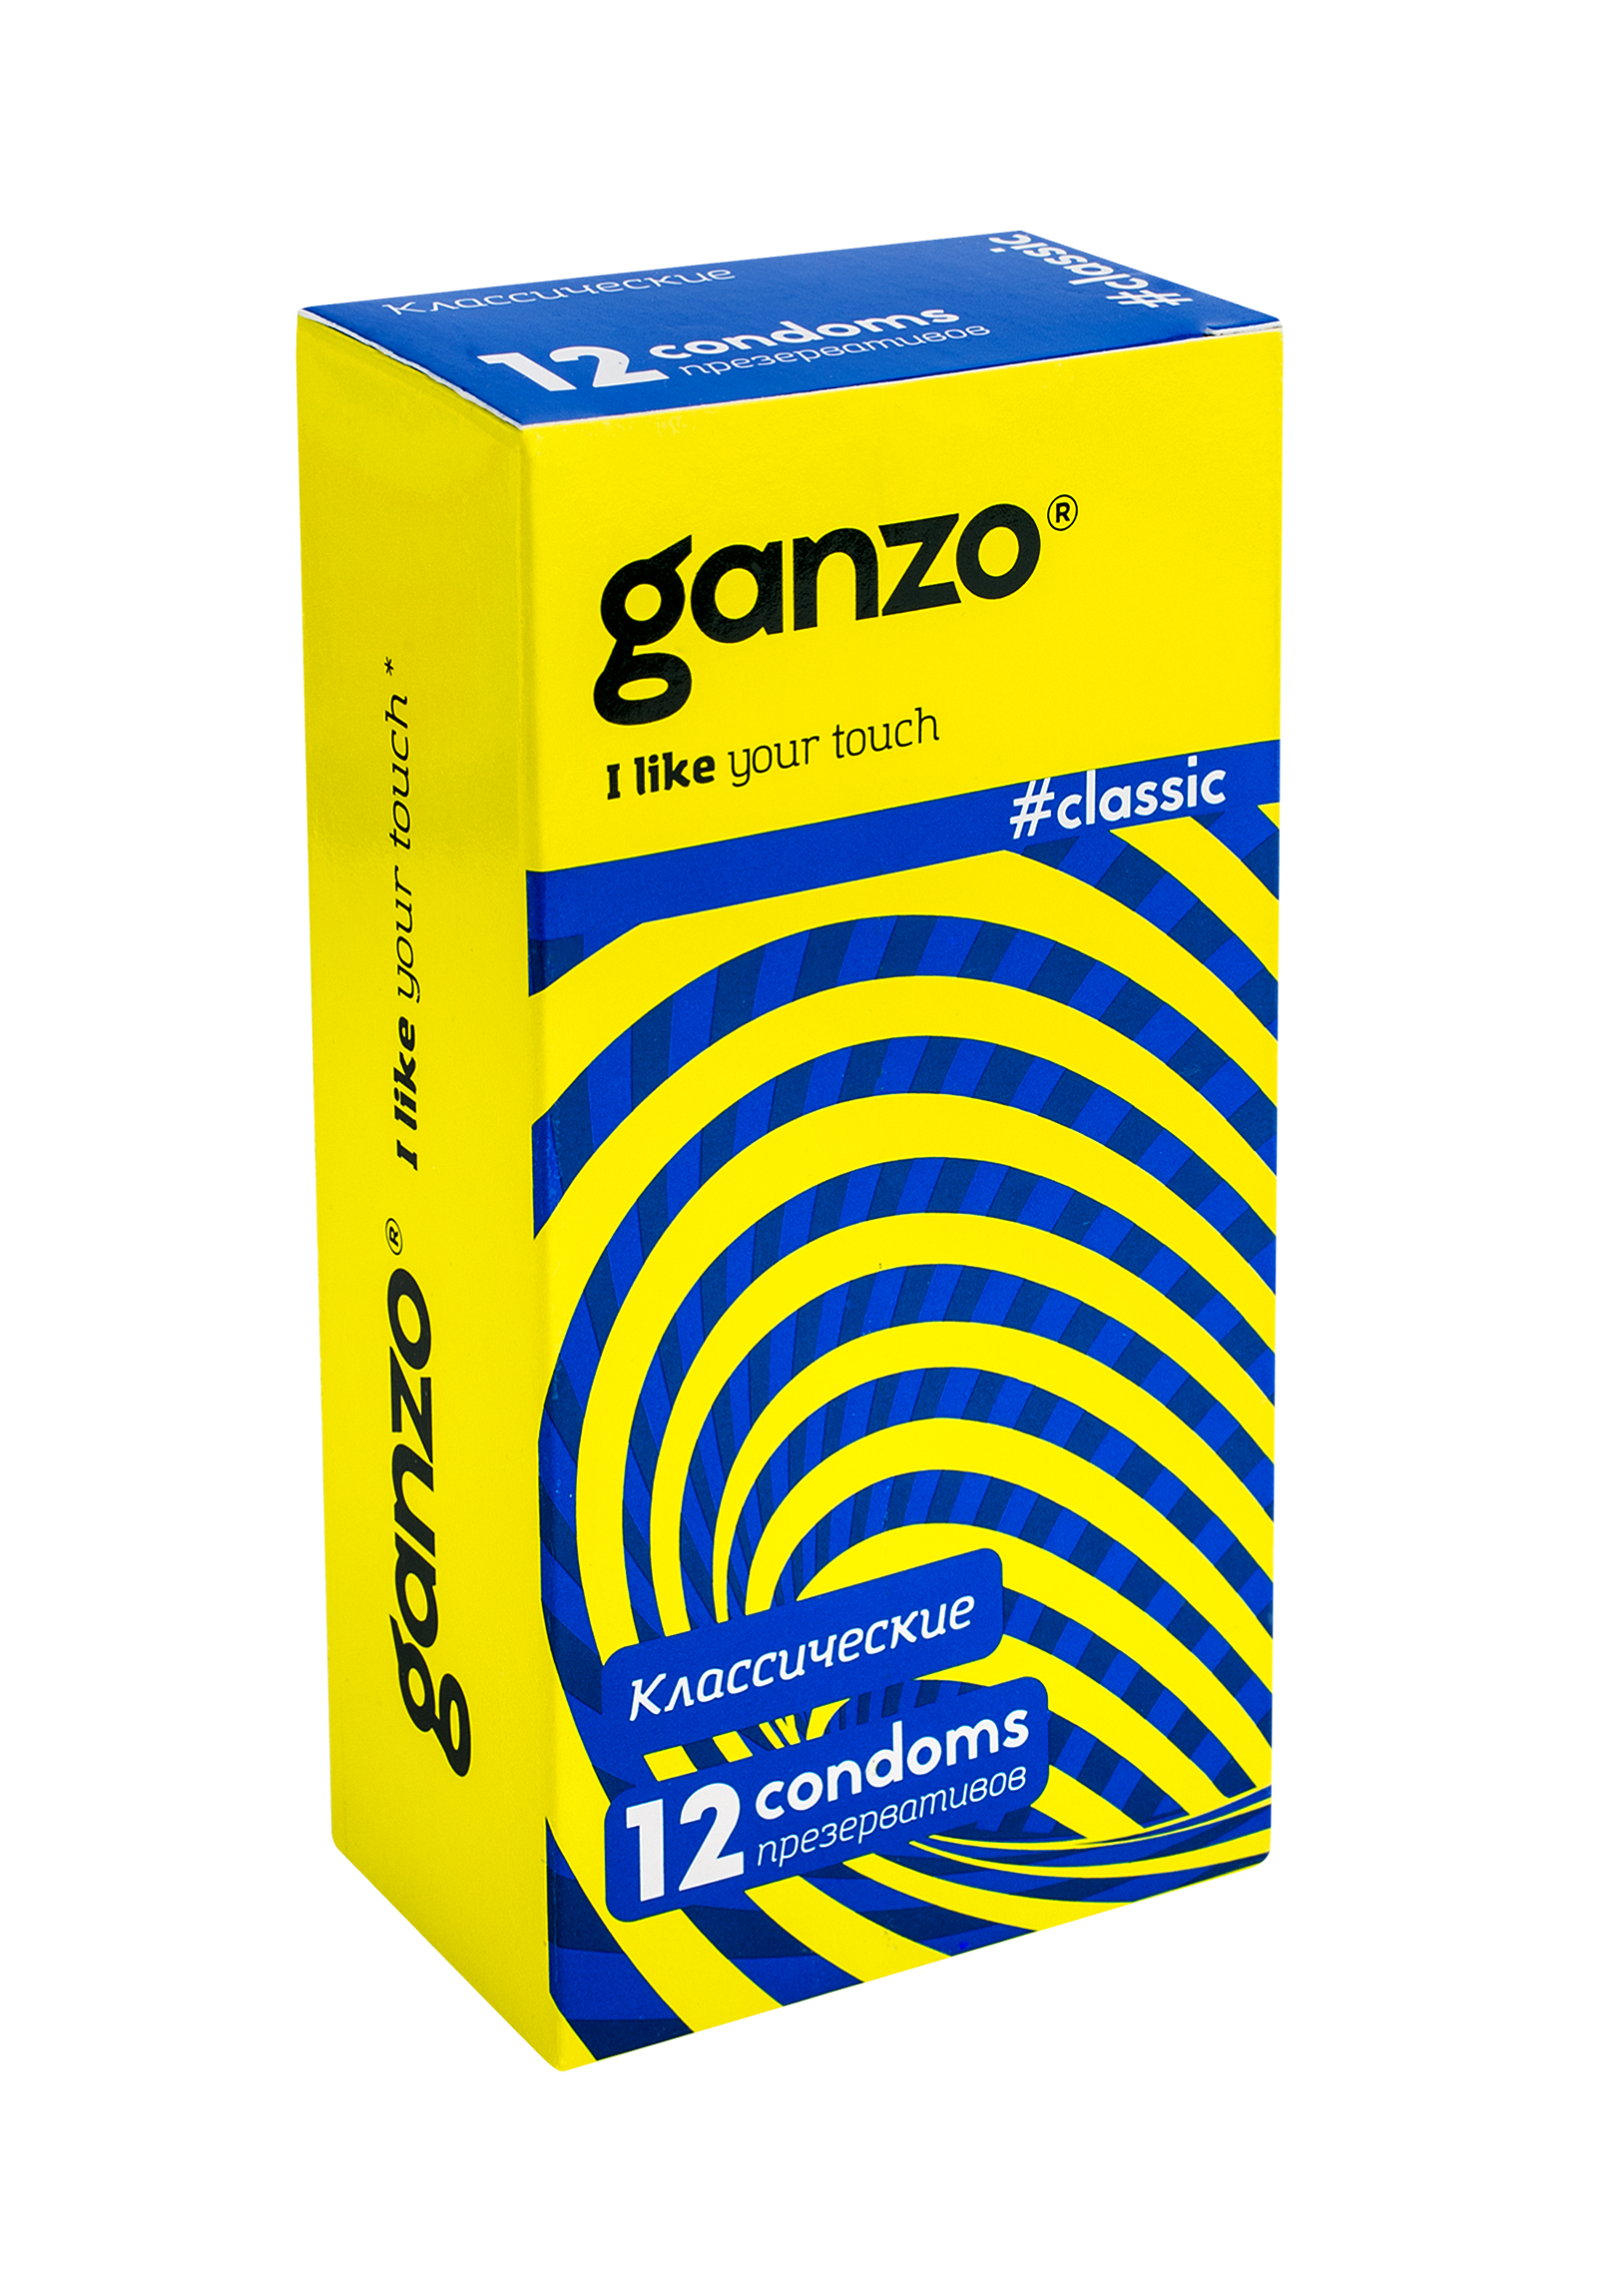 Ганзо презервативы №12 классик